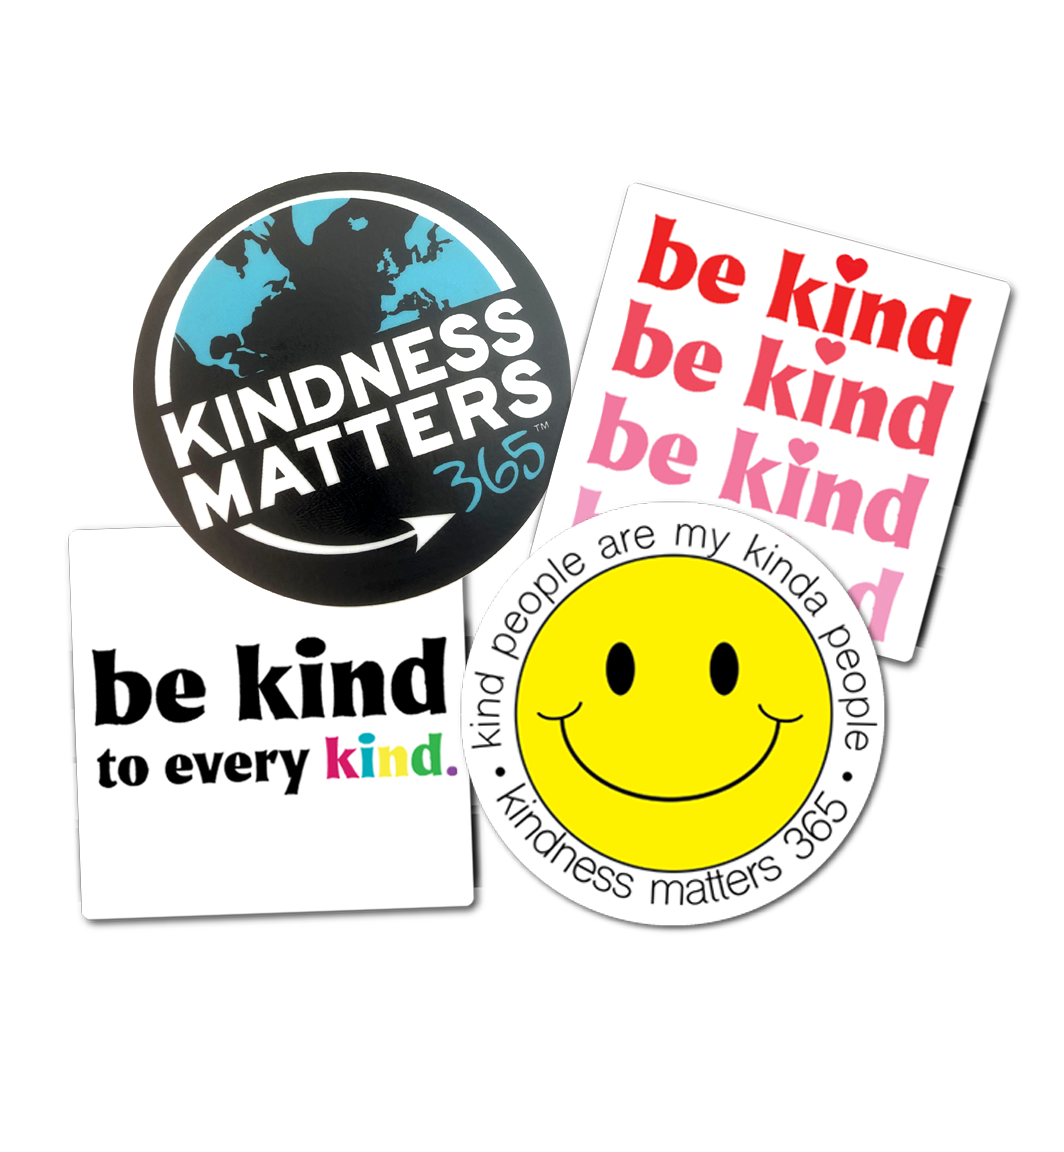 kindness stickers